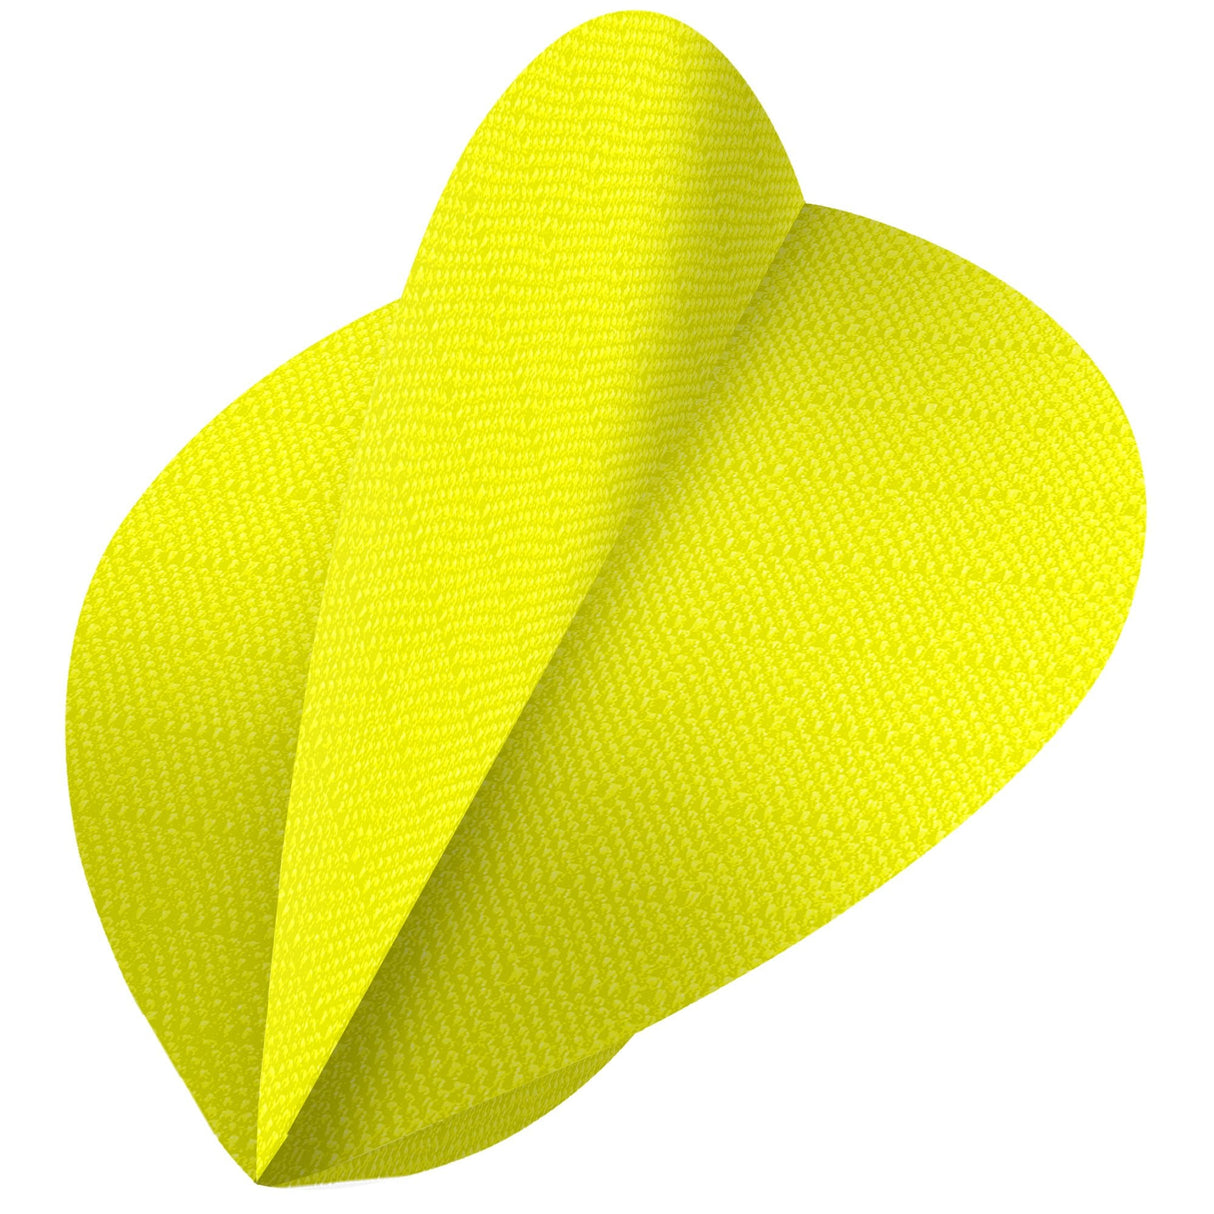 Designa Dart Flights - Fabric Rip Stop Nylon - Longlife - Pear